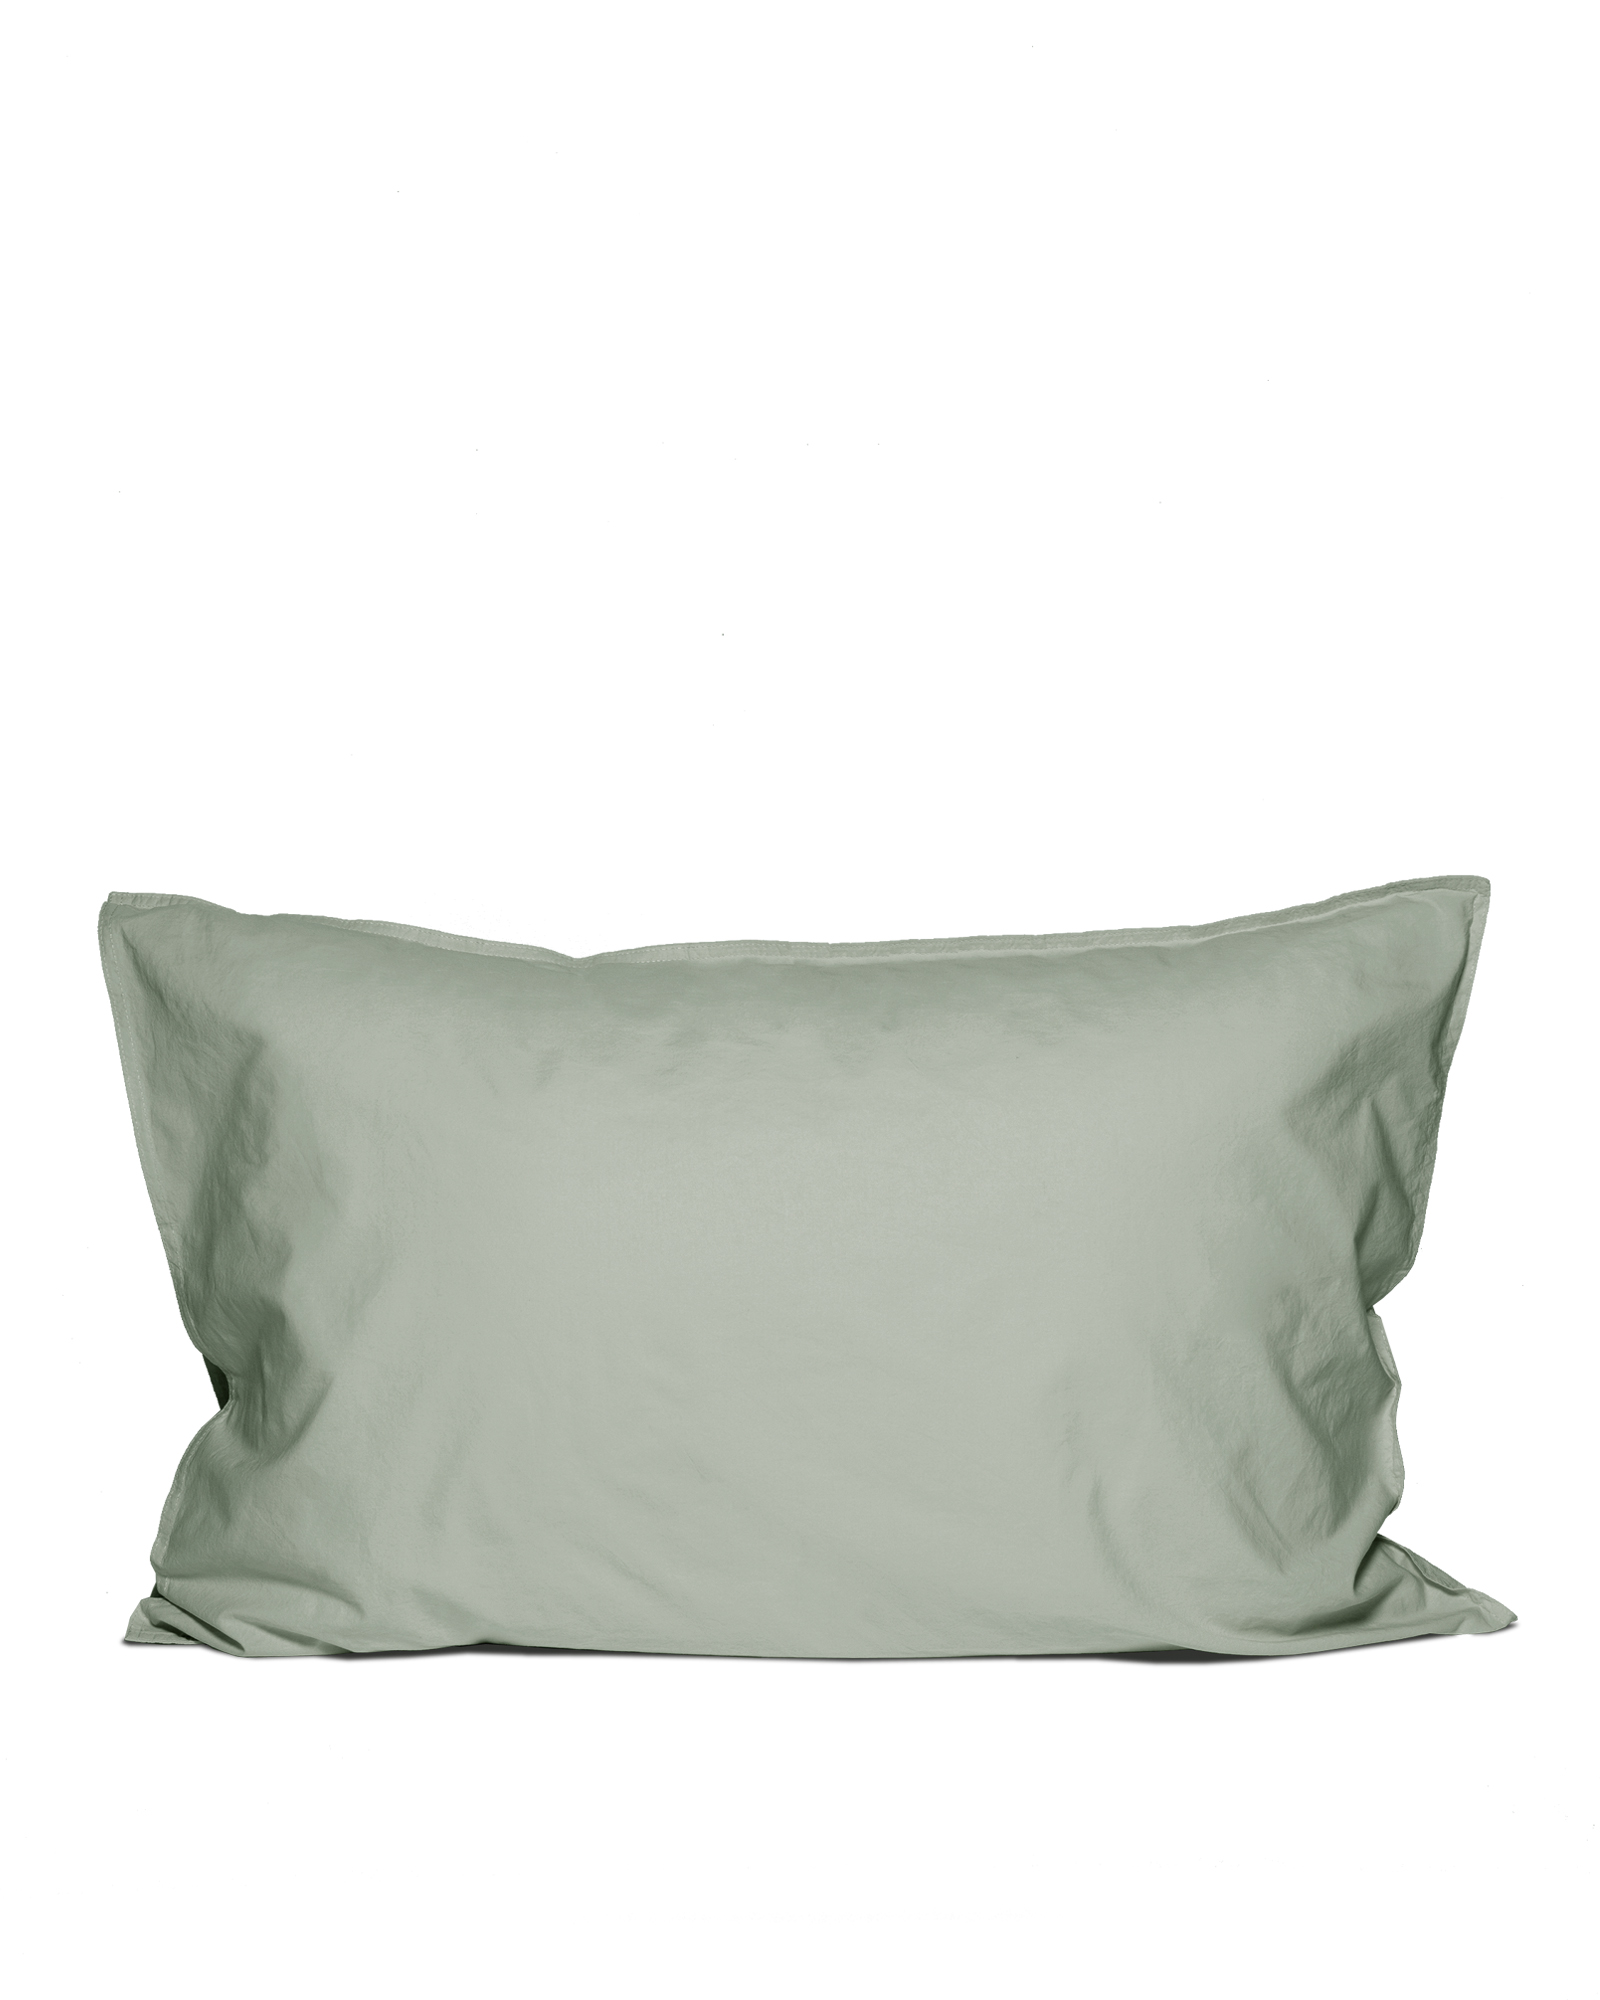 MARIE-MARIE - Pillowcase VINTAGE COTTON Olive - 50x75 cm - Olive